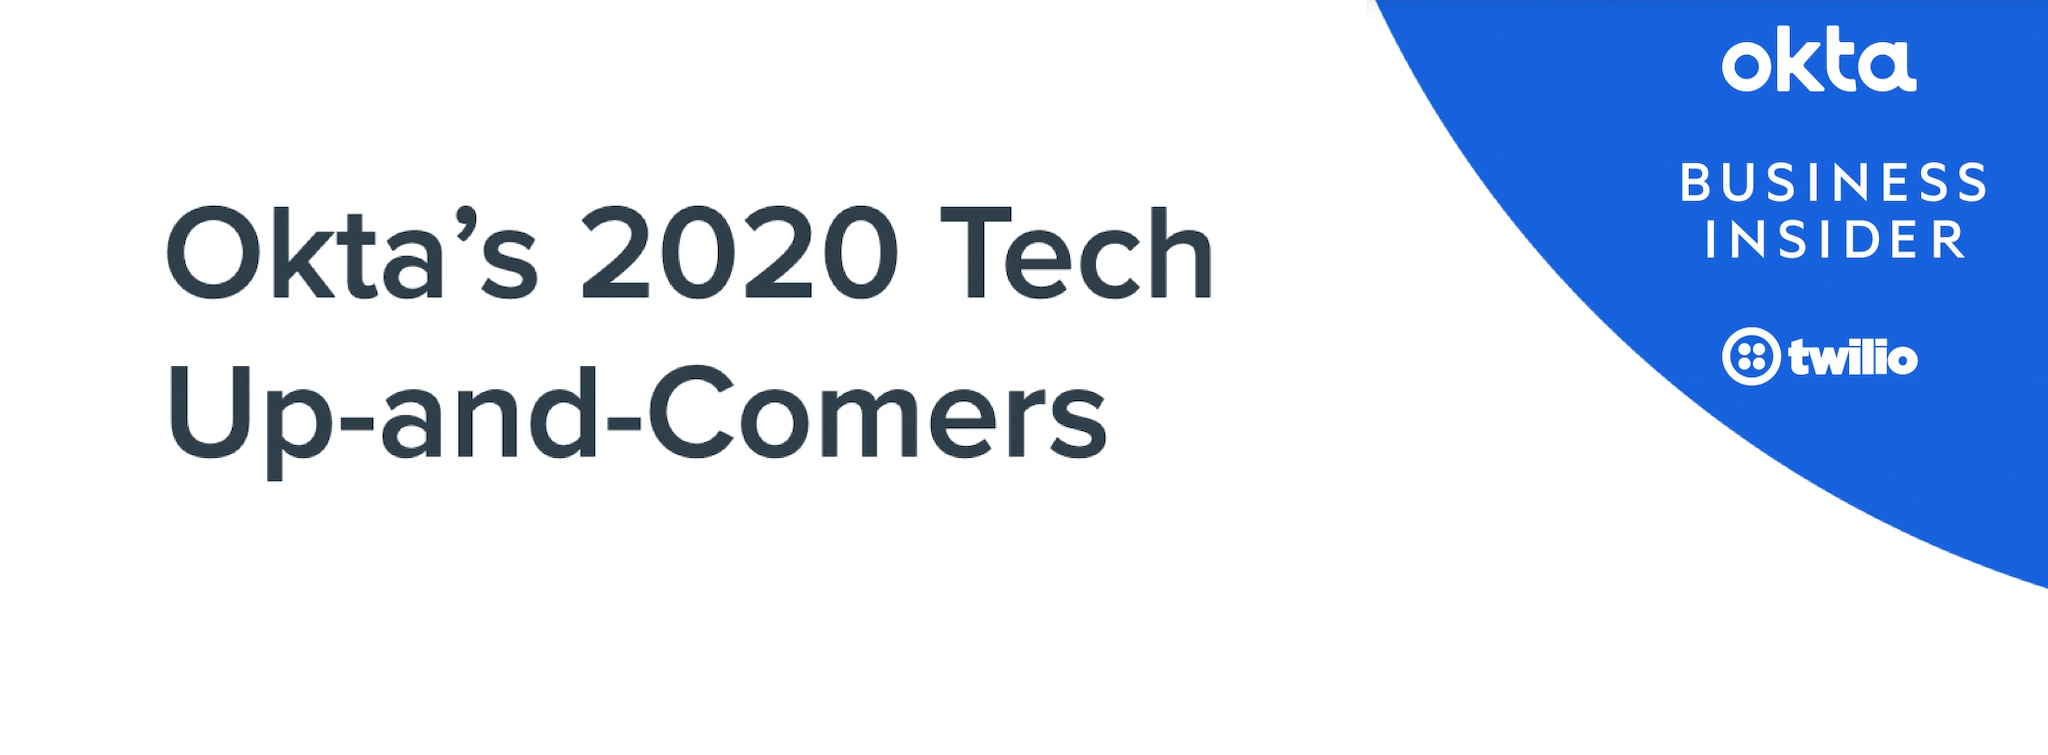 Okta’s 2020 Tech Up-and-Comers